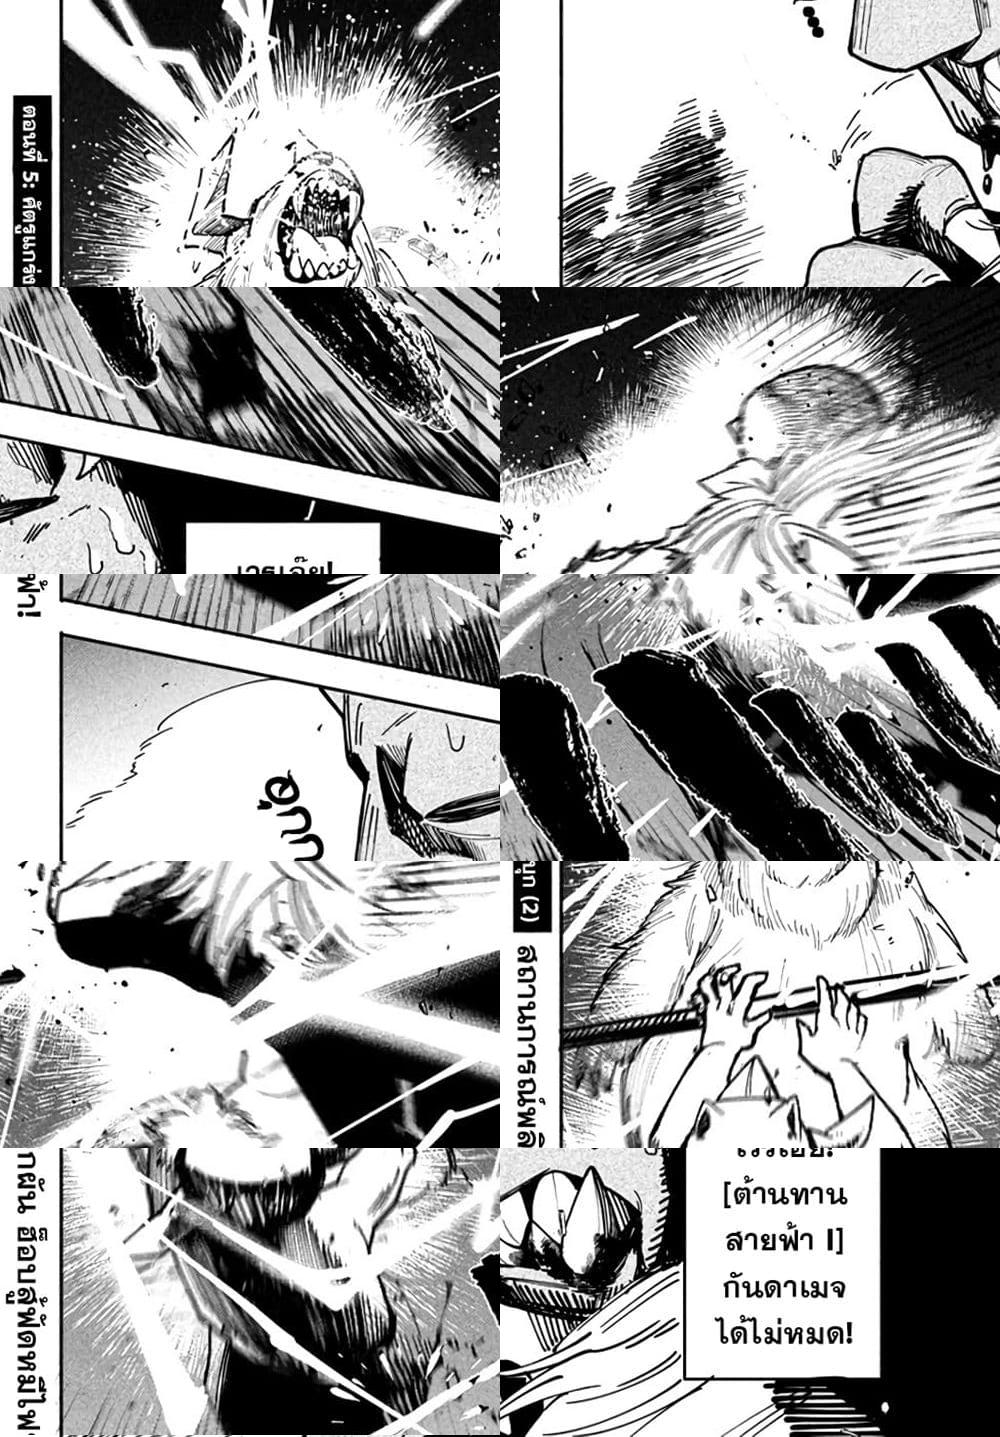 Virus Tensei kara Hajimaru Isekai Kansen Monogatari - ศัตรูแกร่งบุก (2) - 2